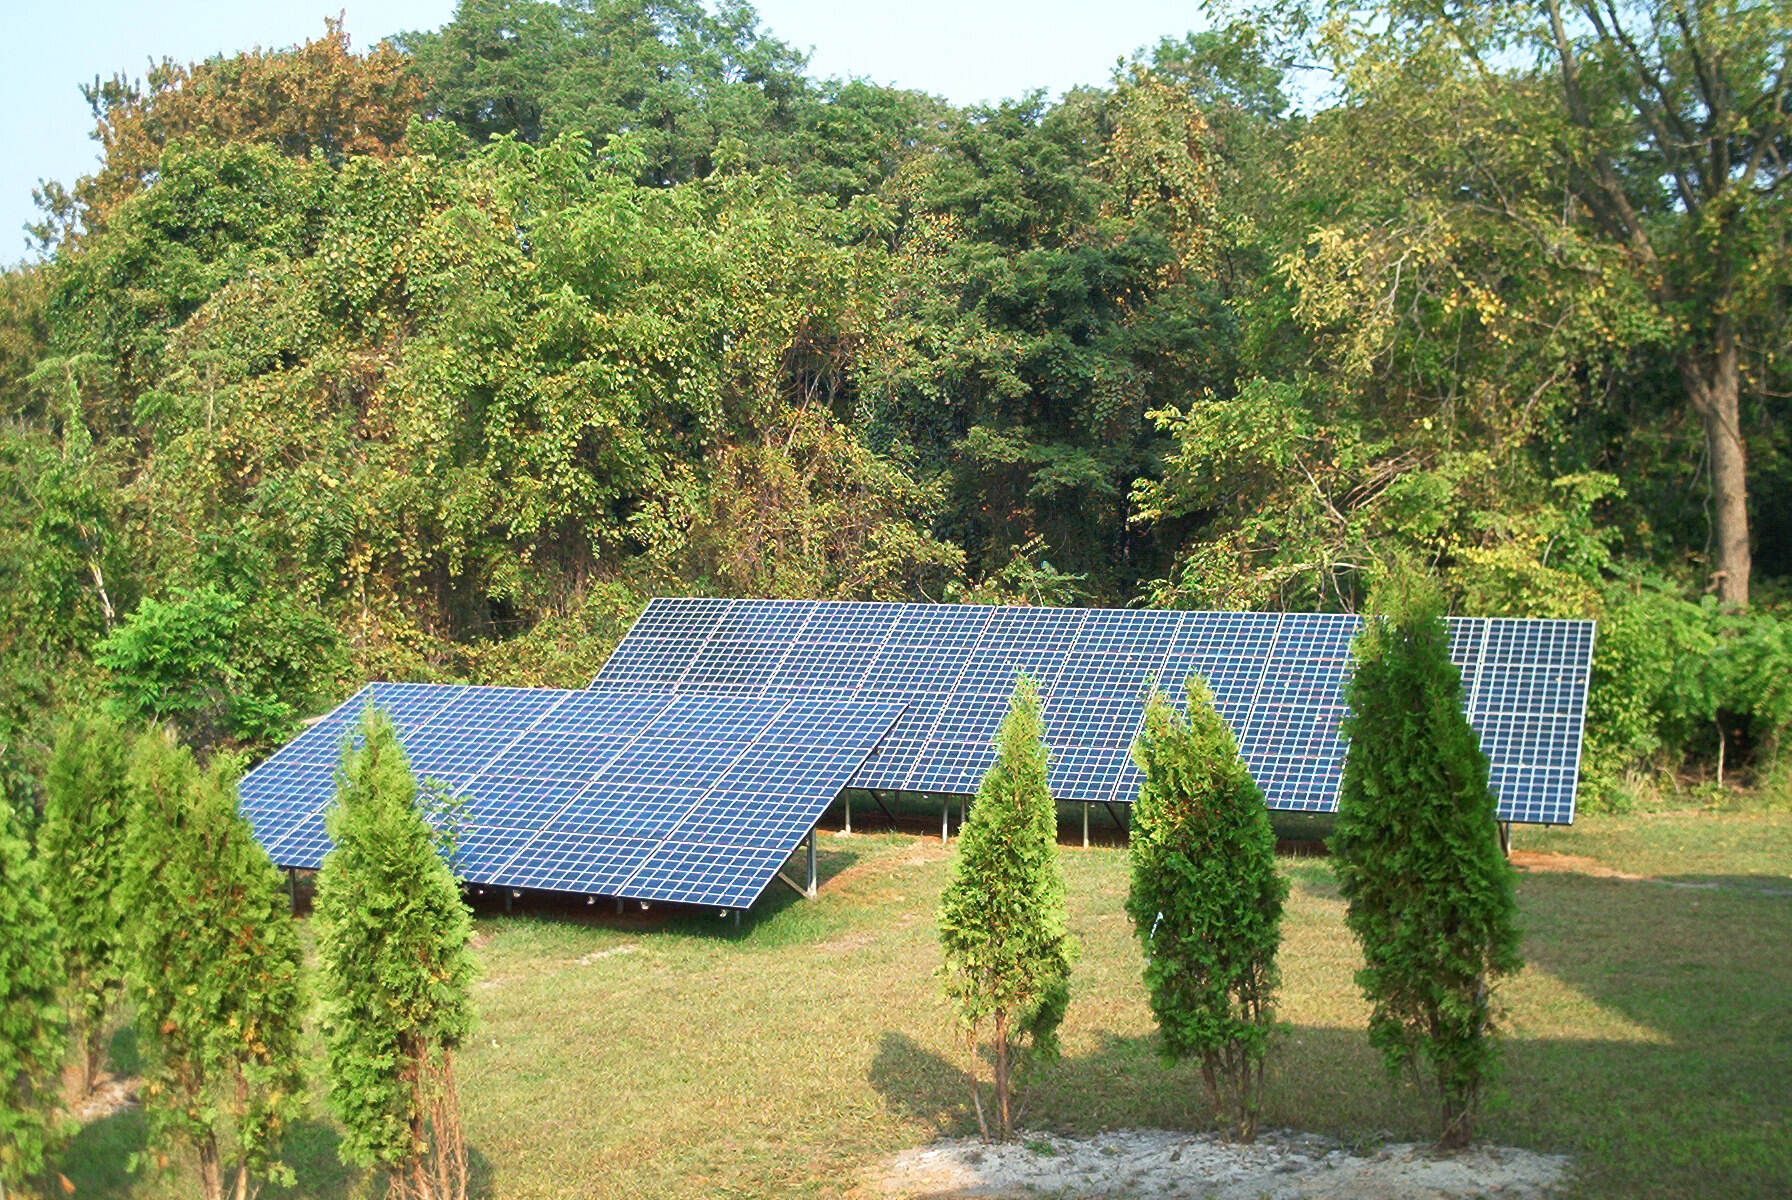 Solar panels with trees around